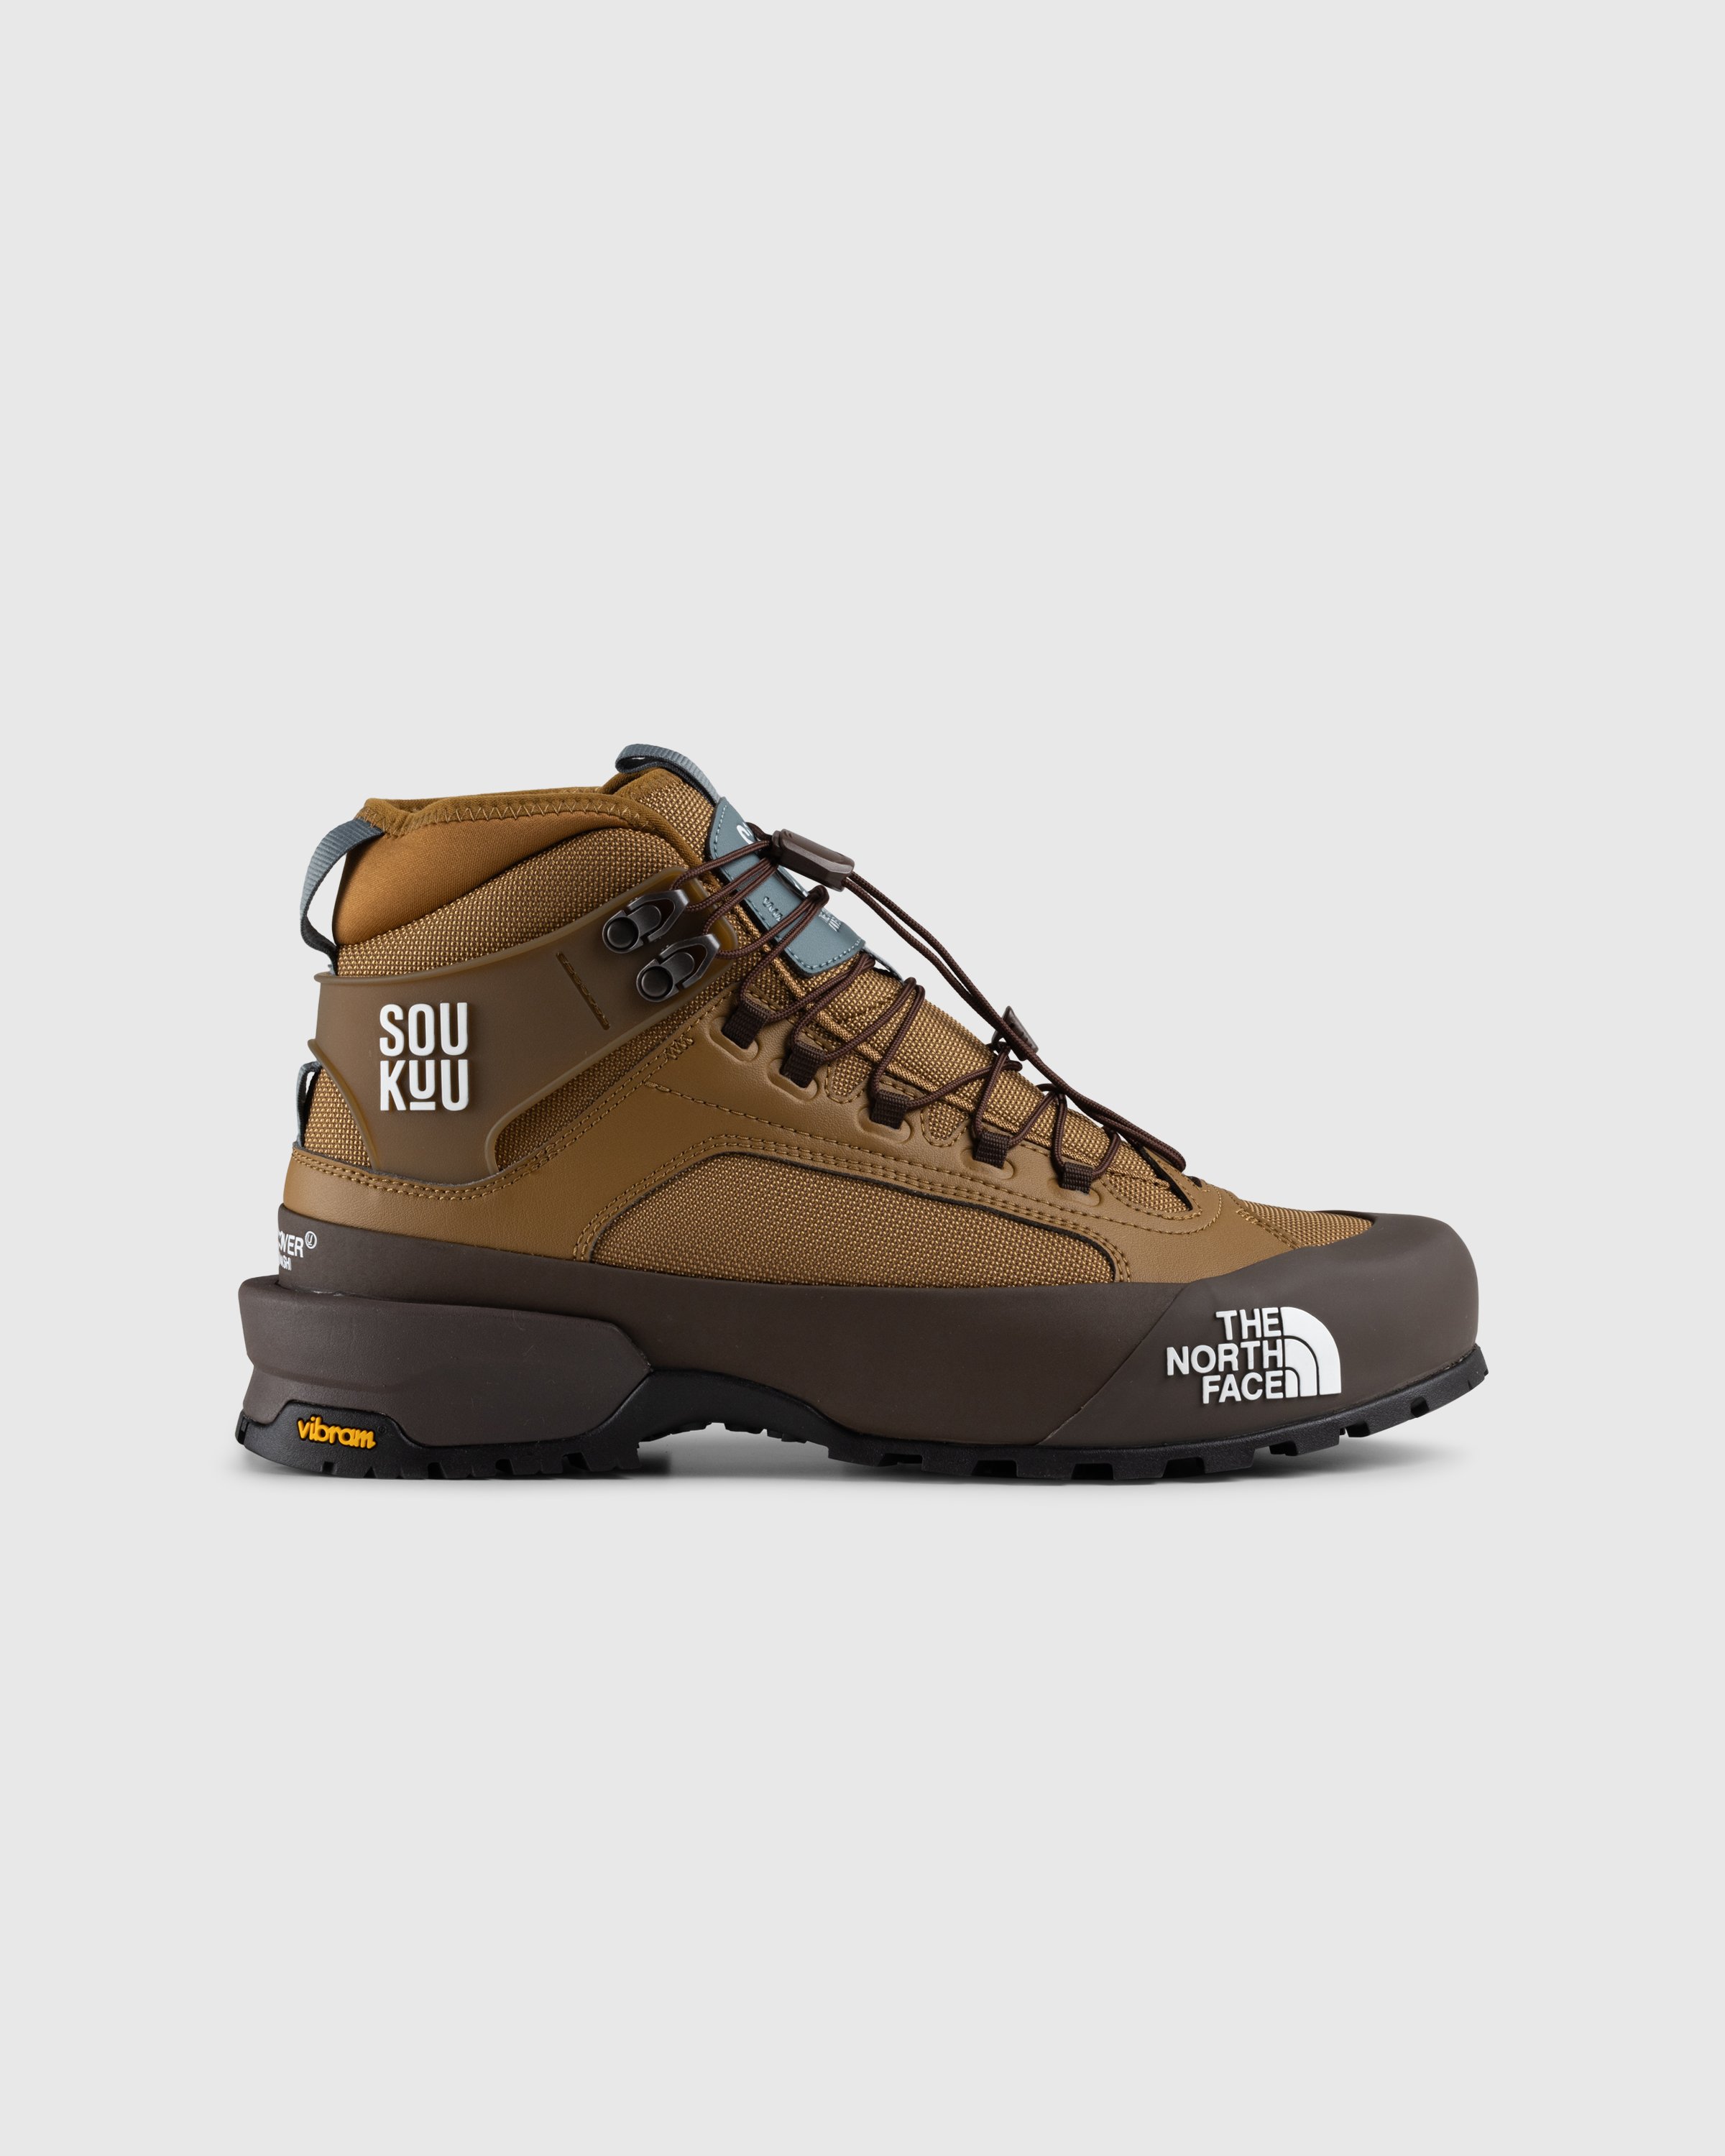 The North Face x UNDERCOVER - Soukuu Trail RAT Bronze Brown/Concrete Gray - Footwear - Multi - Image 1